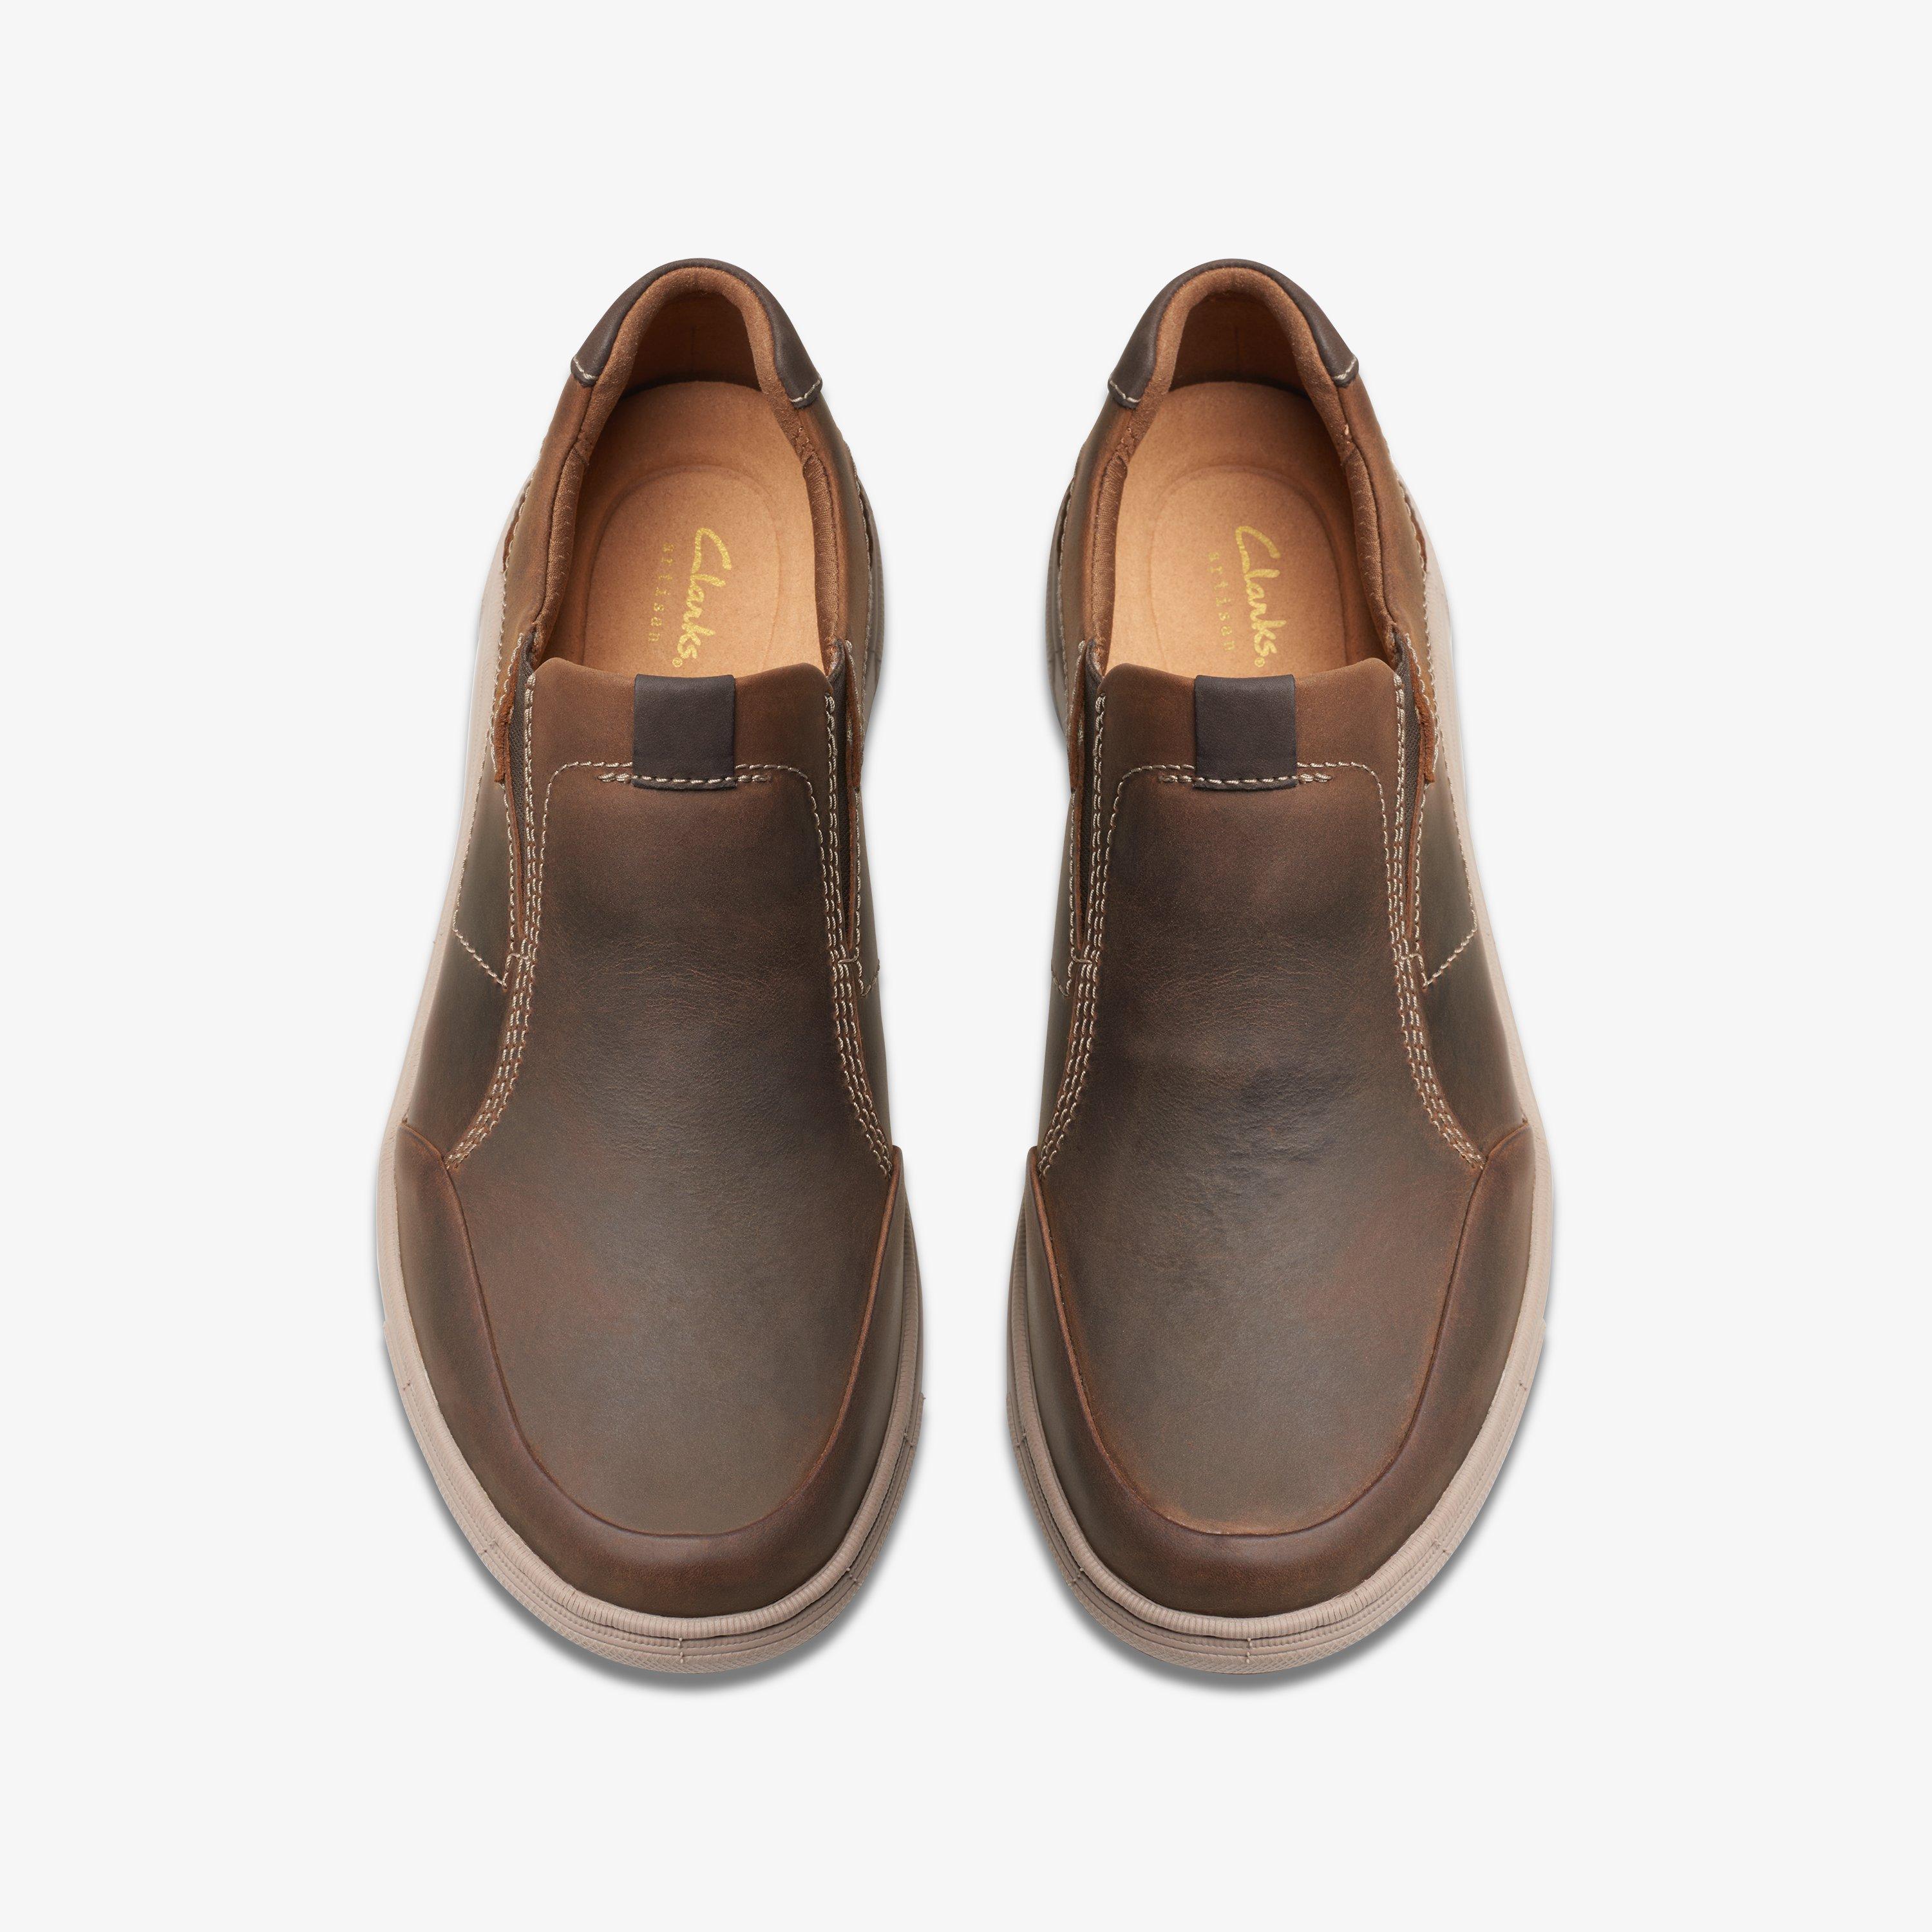 Men's Comfortable Shoes - Sneakers & Boots| Clarks US